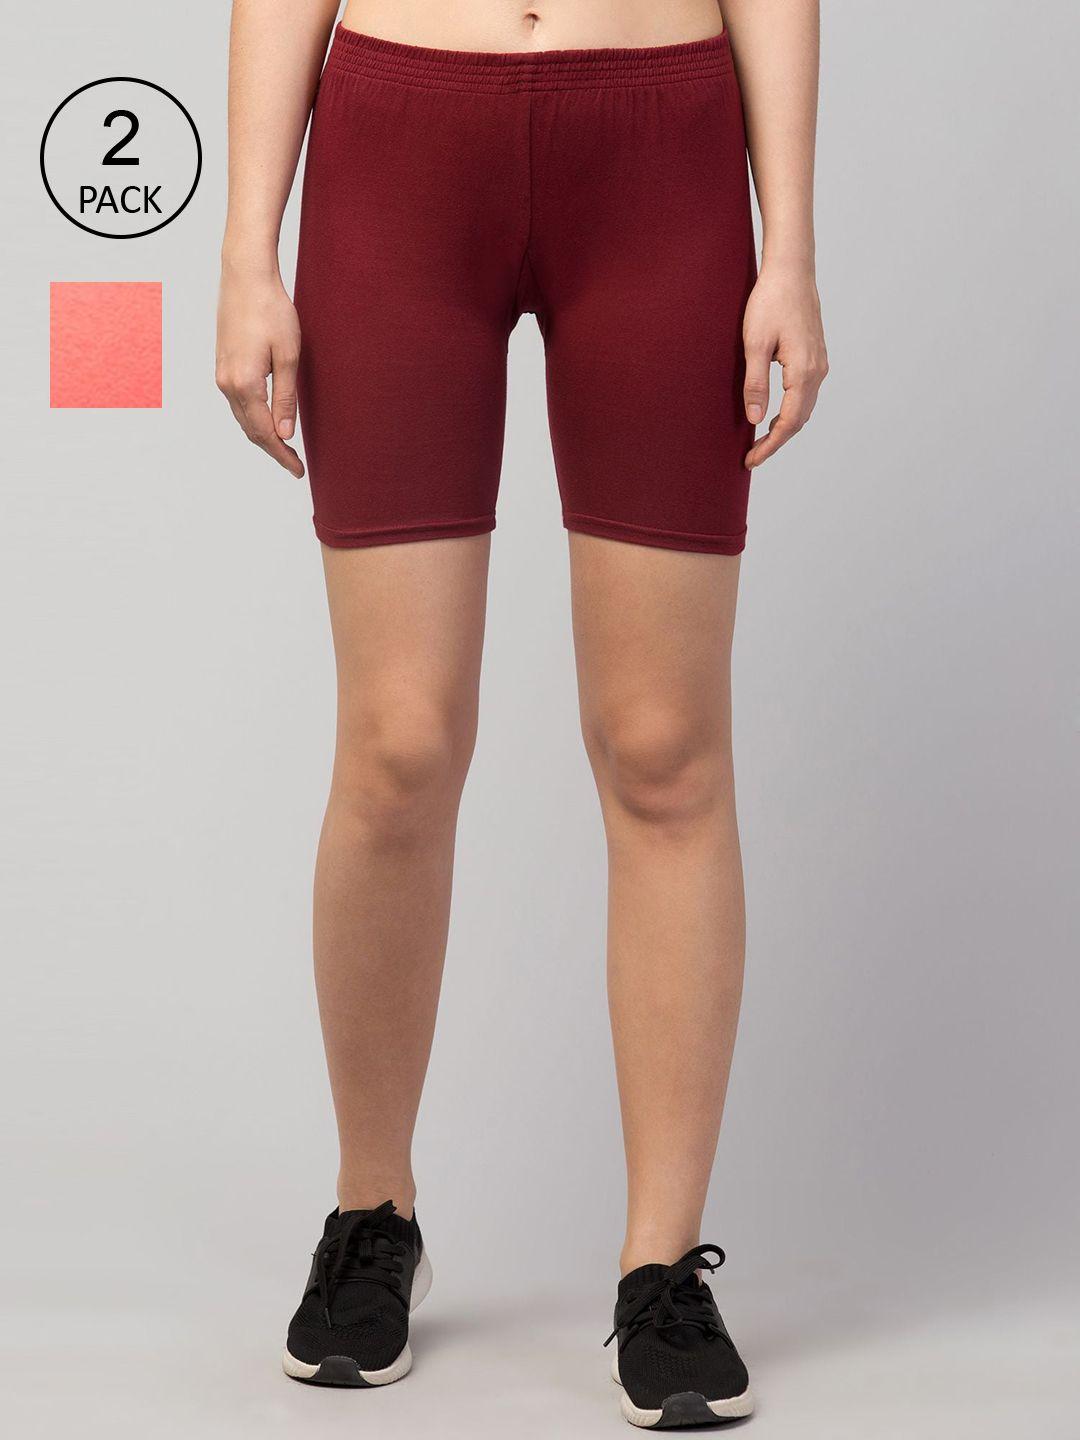 apraa & parma women maroon slim fit cycling sports shorts set of 2